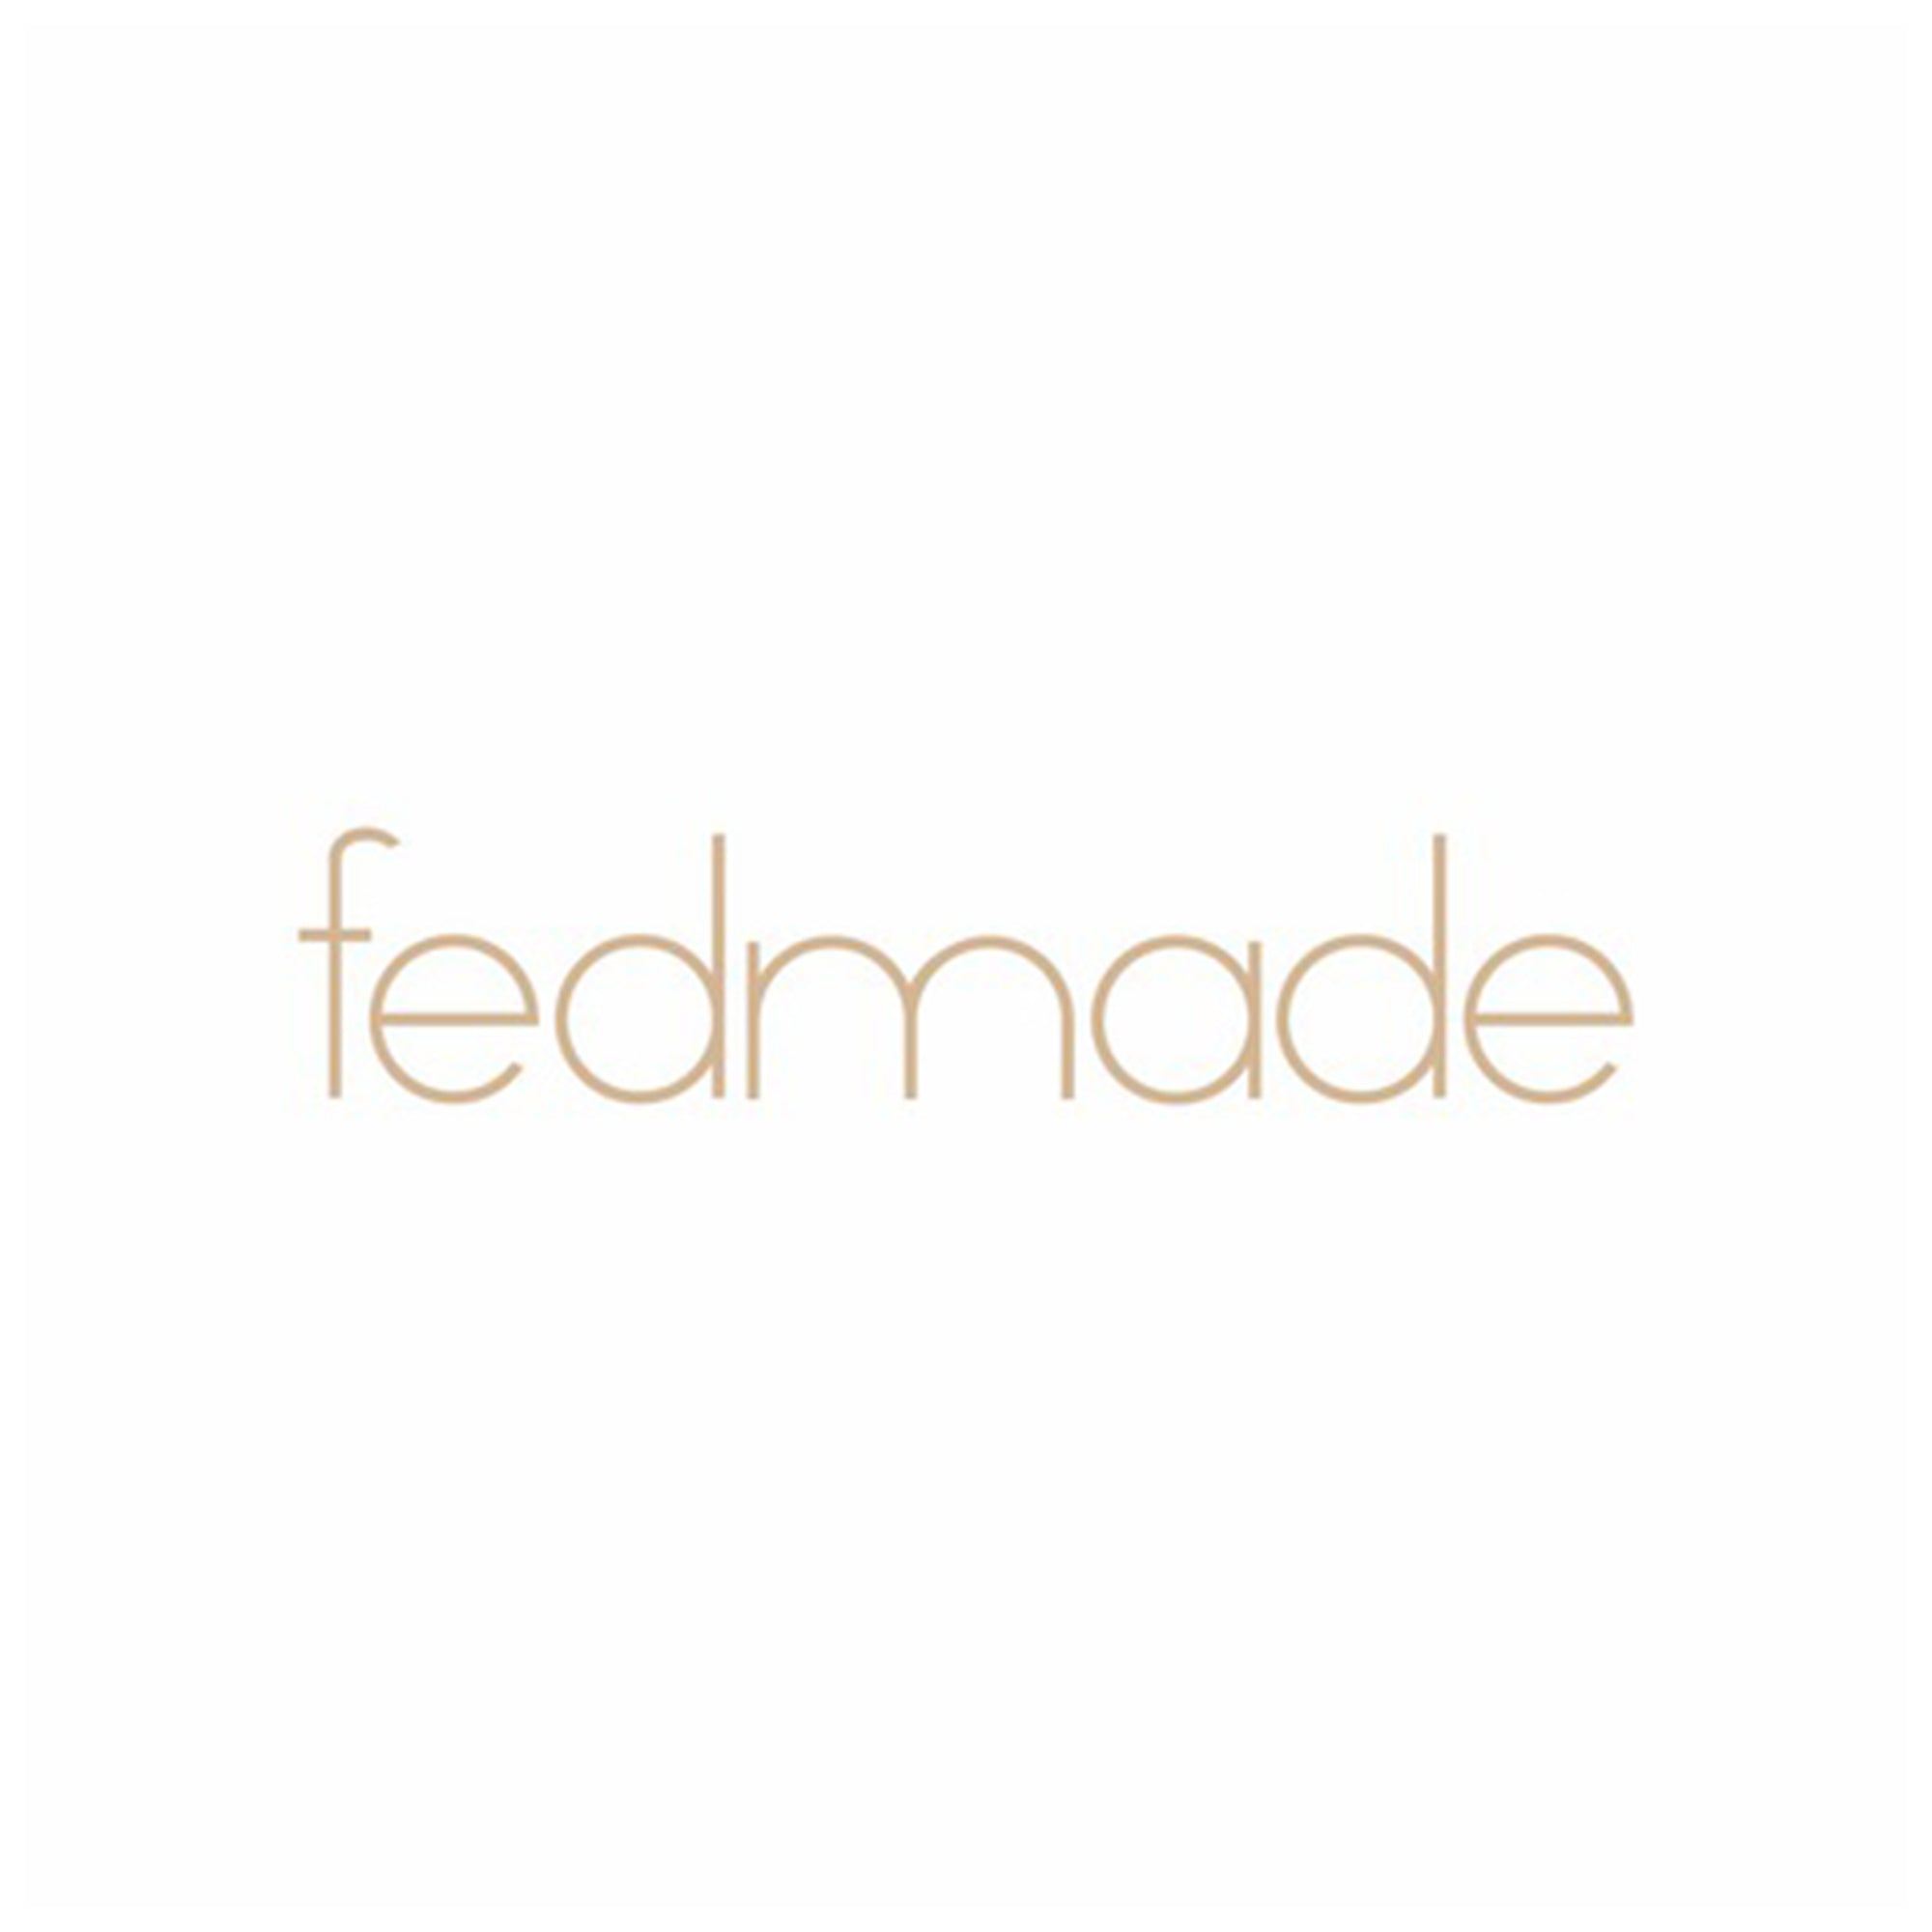 Studio Fedmade logo